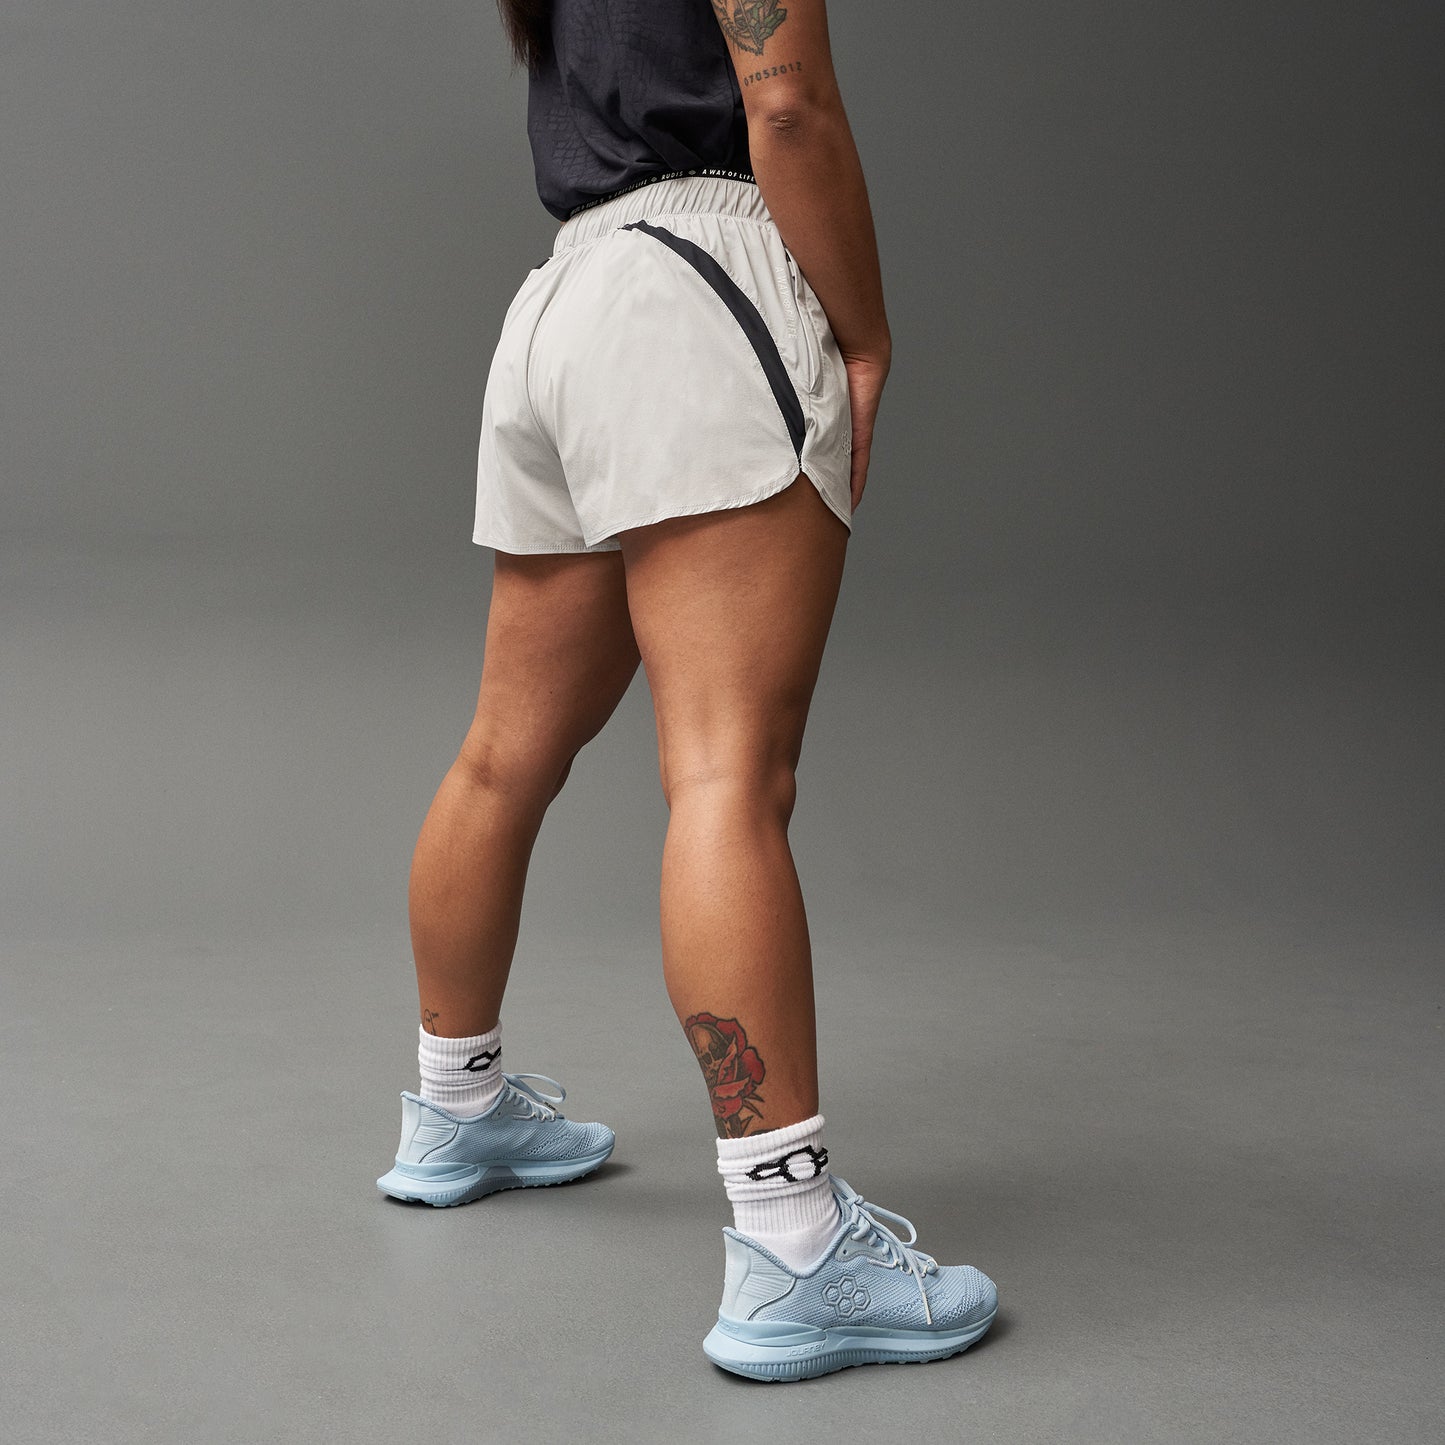 RUDIS Women's Hybrid Training Shorts